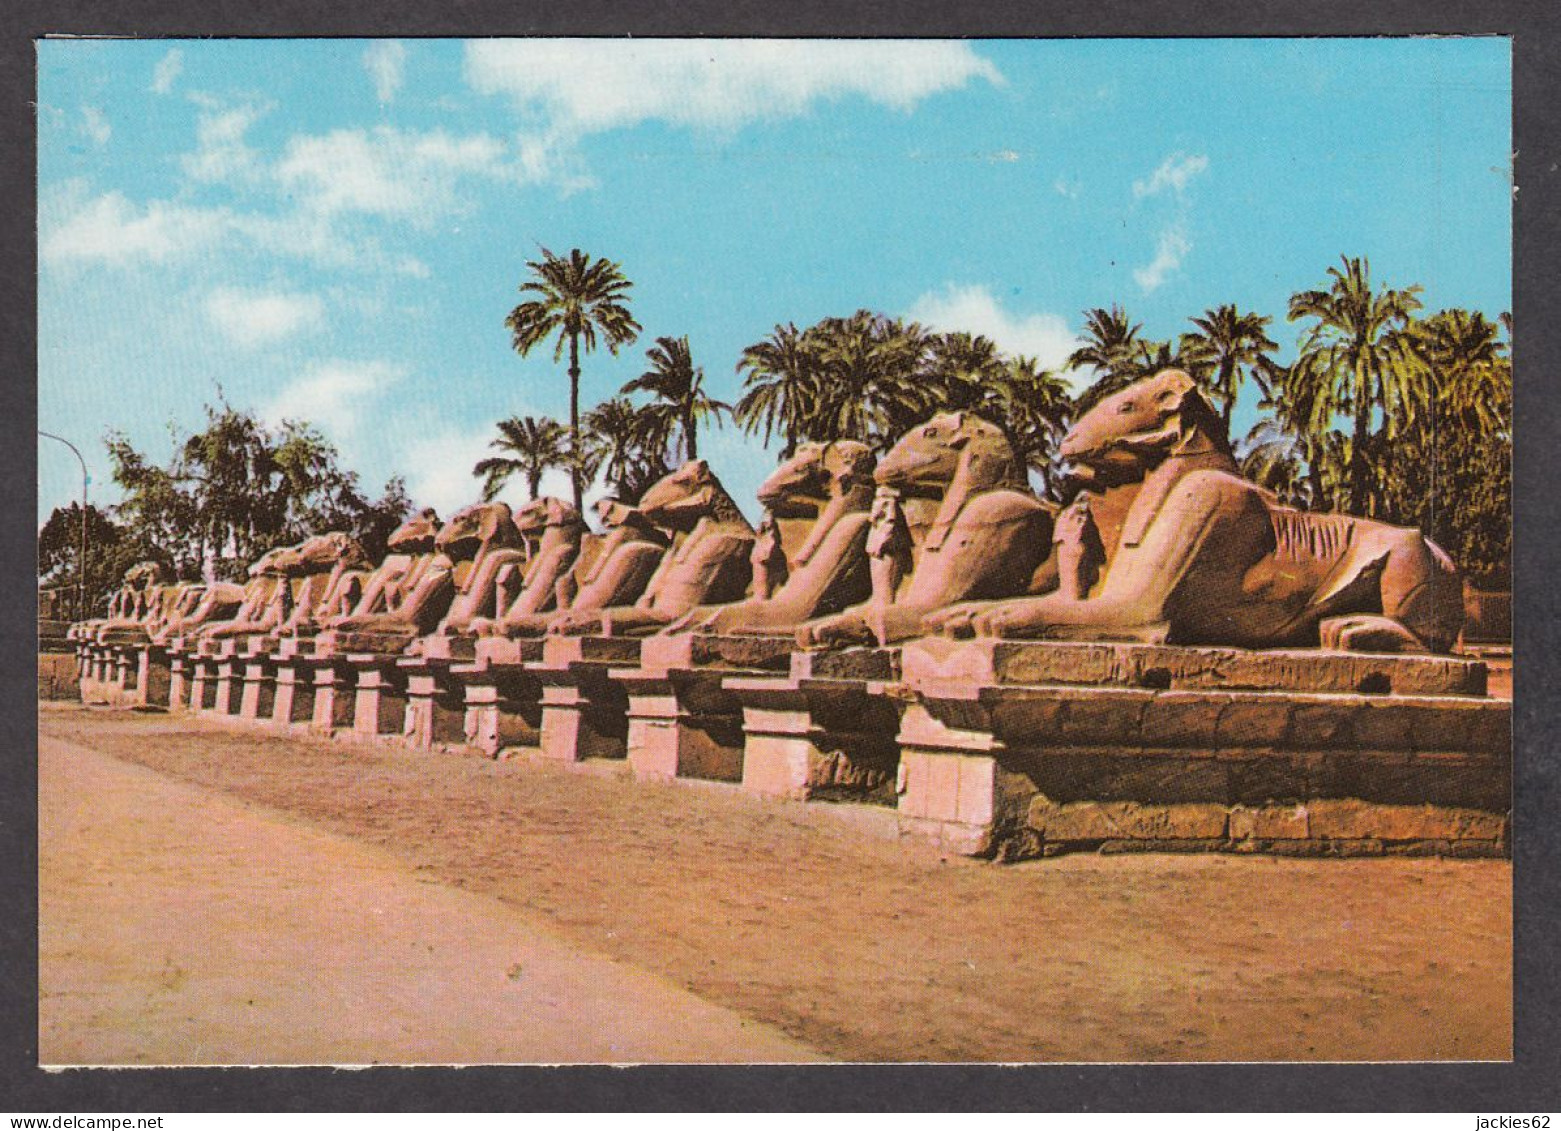 114476/ KARNAK The Sphinx Avenue - Luxor